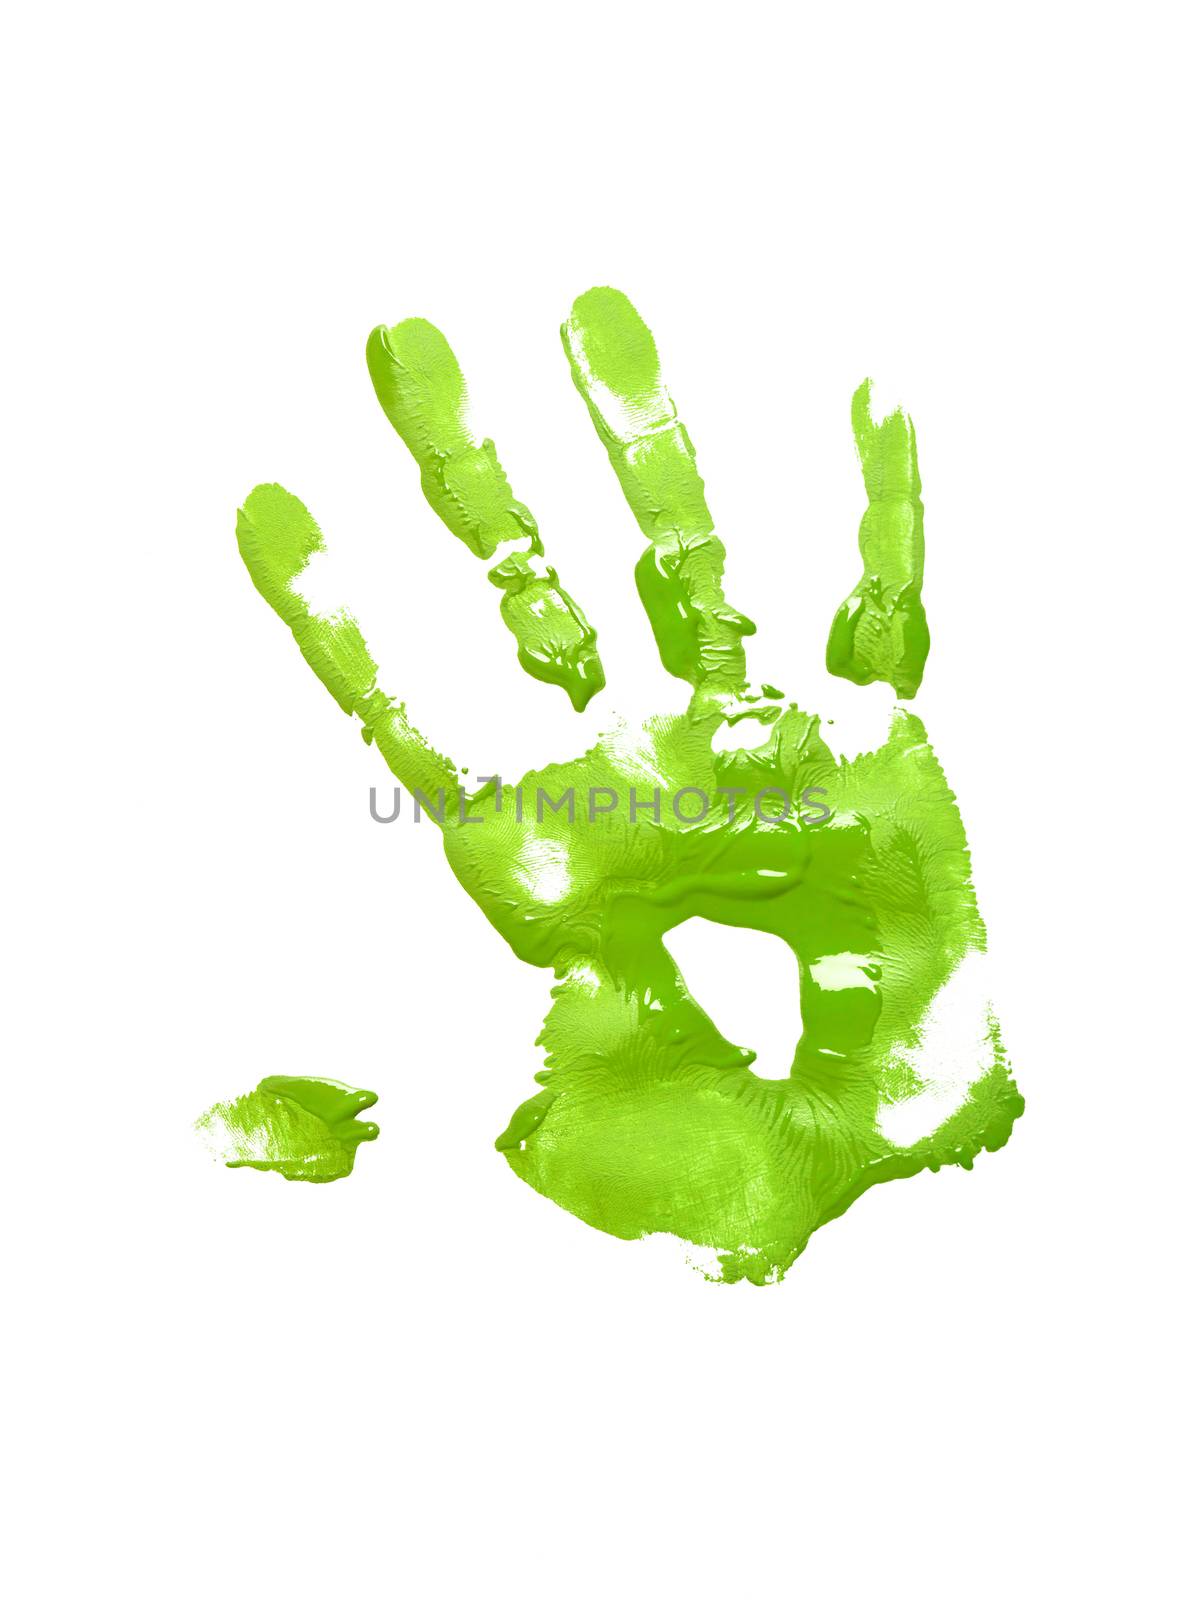 Green handprint on white background